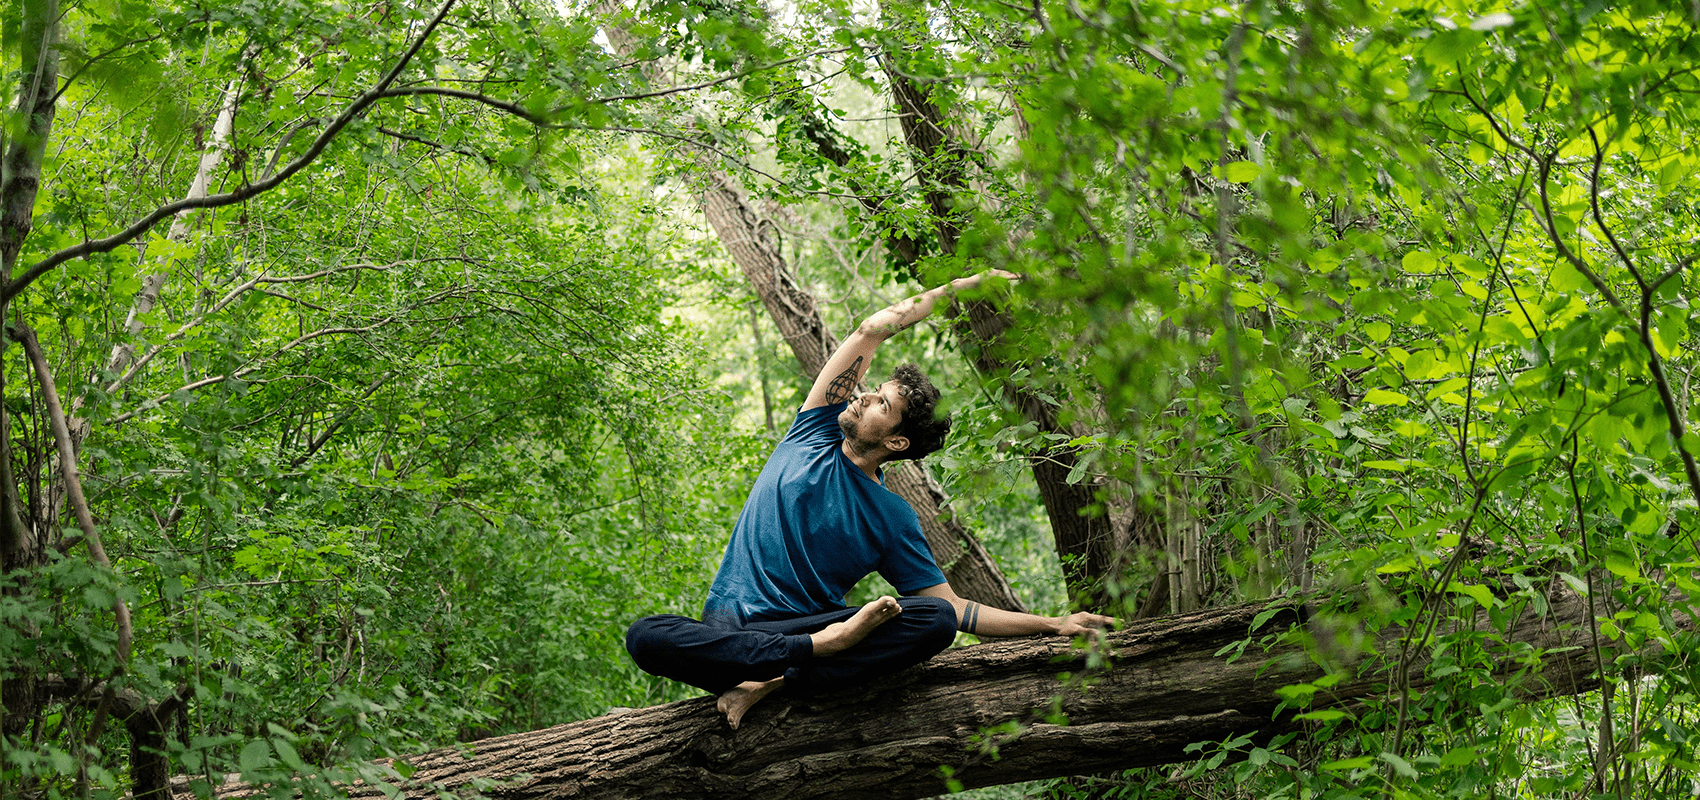 shamminski yoga header Wald Yoga